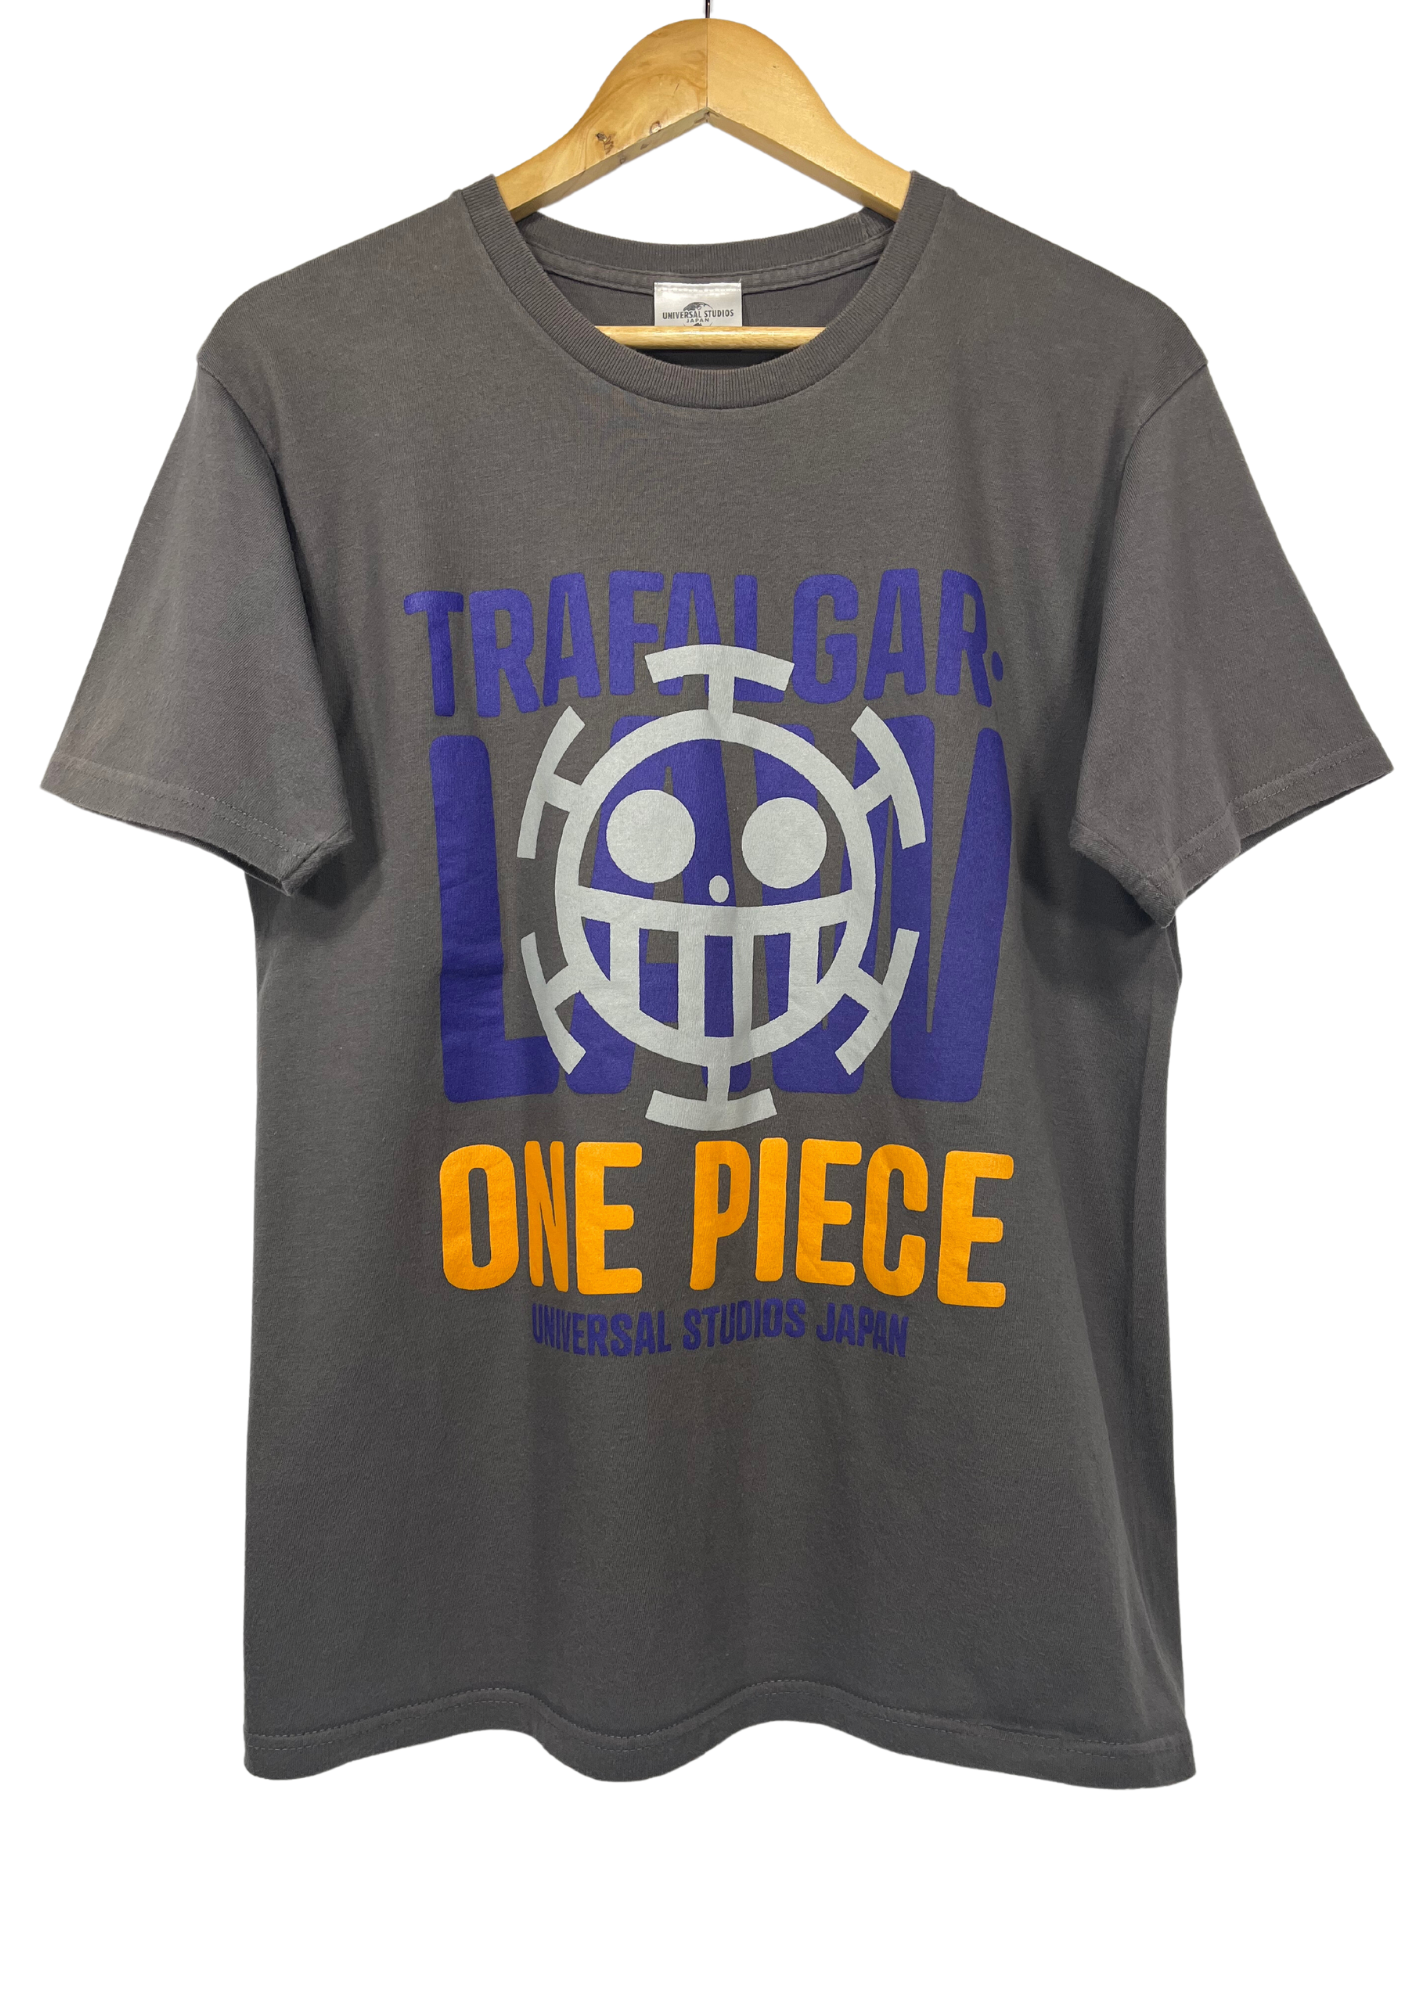 One Piece x Universal Studio Japan Trafalgar T-shirt